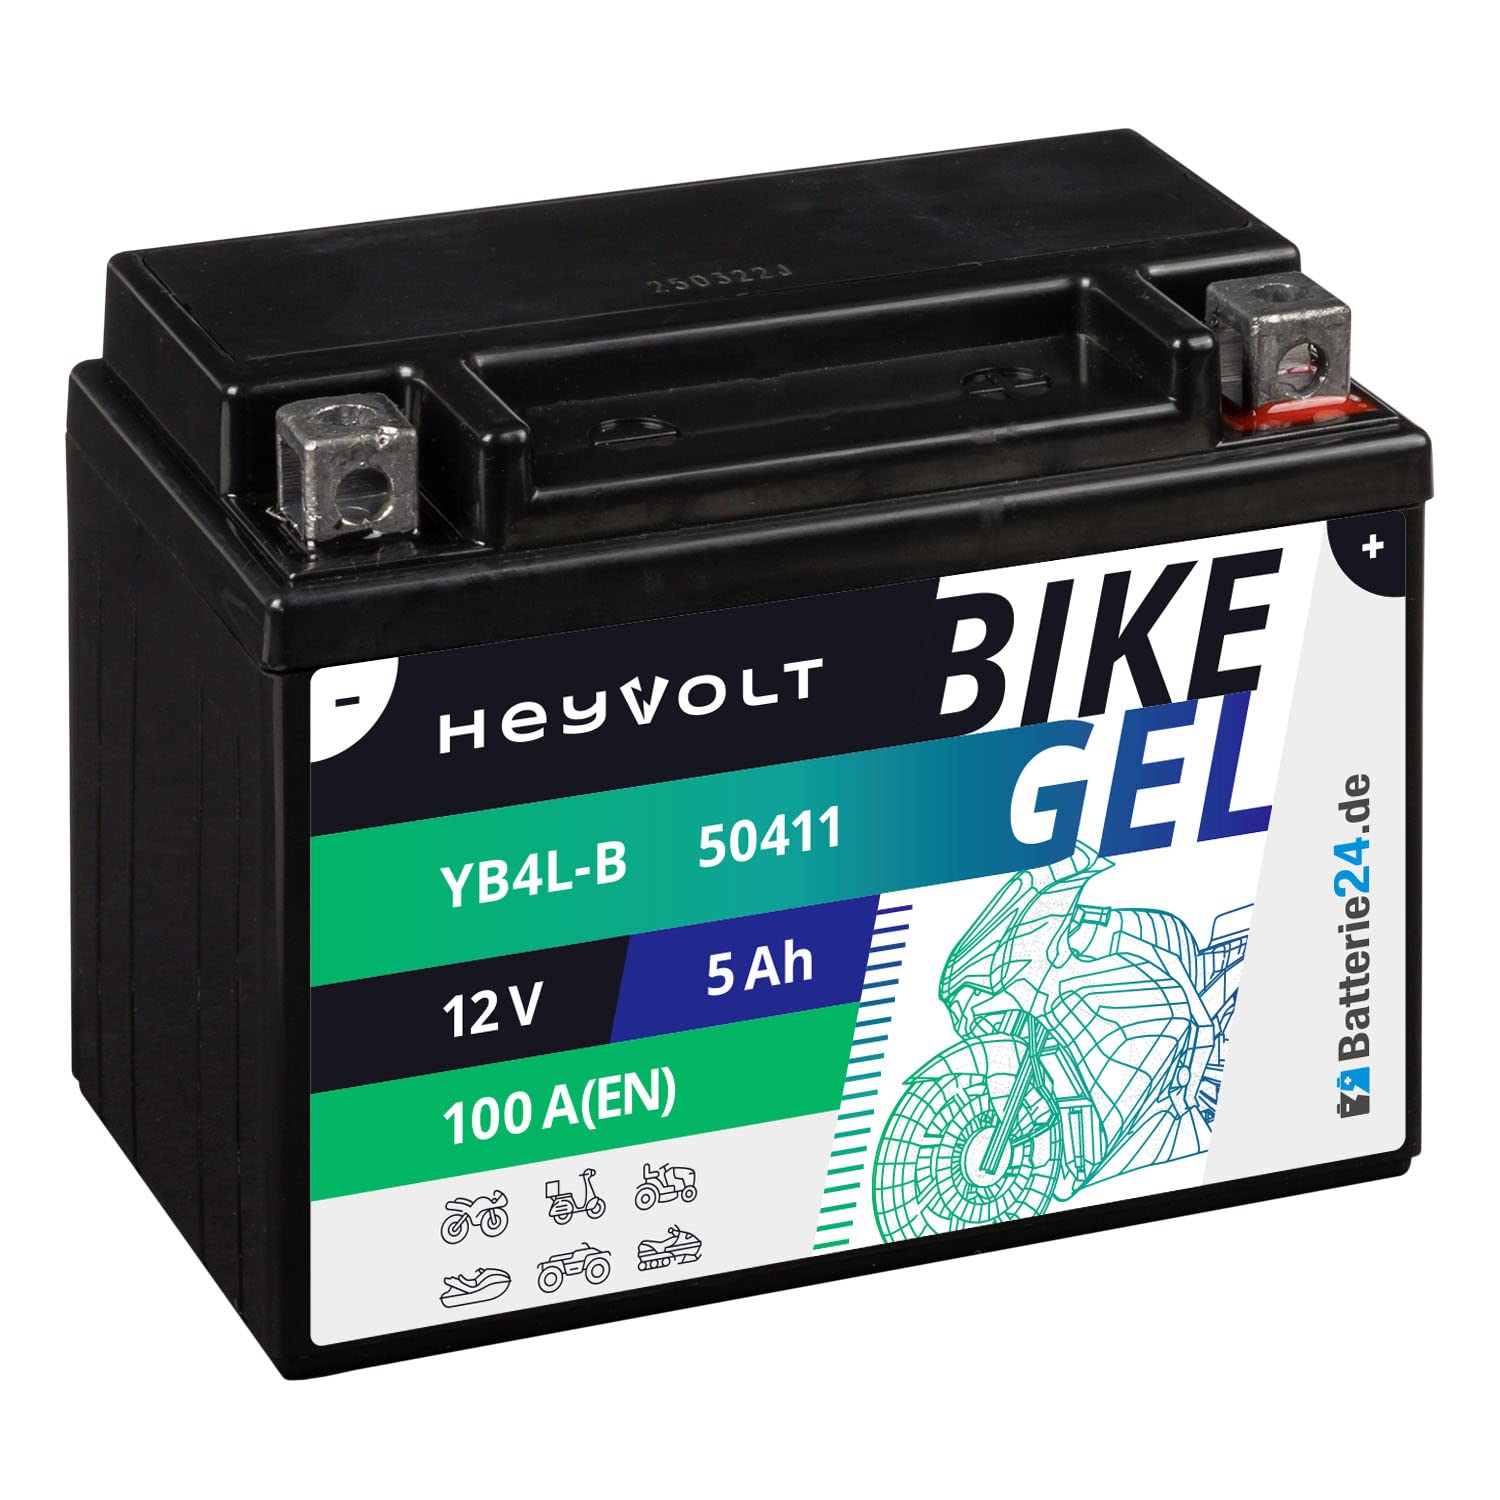 HeyVolt GEL Rollerbatterie 12V 5Ah YB4L-B CB4L-B YB4L-A 50411 12N4-3B ers. 4Ah Motorrad von Batterie24.de